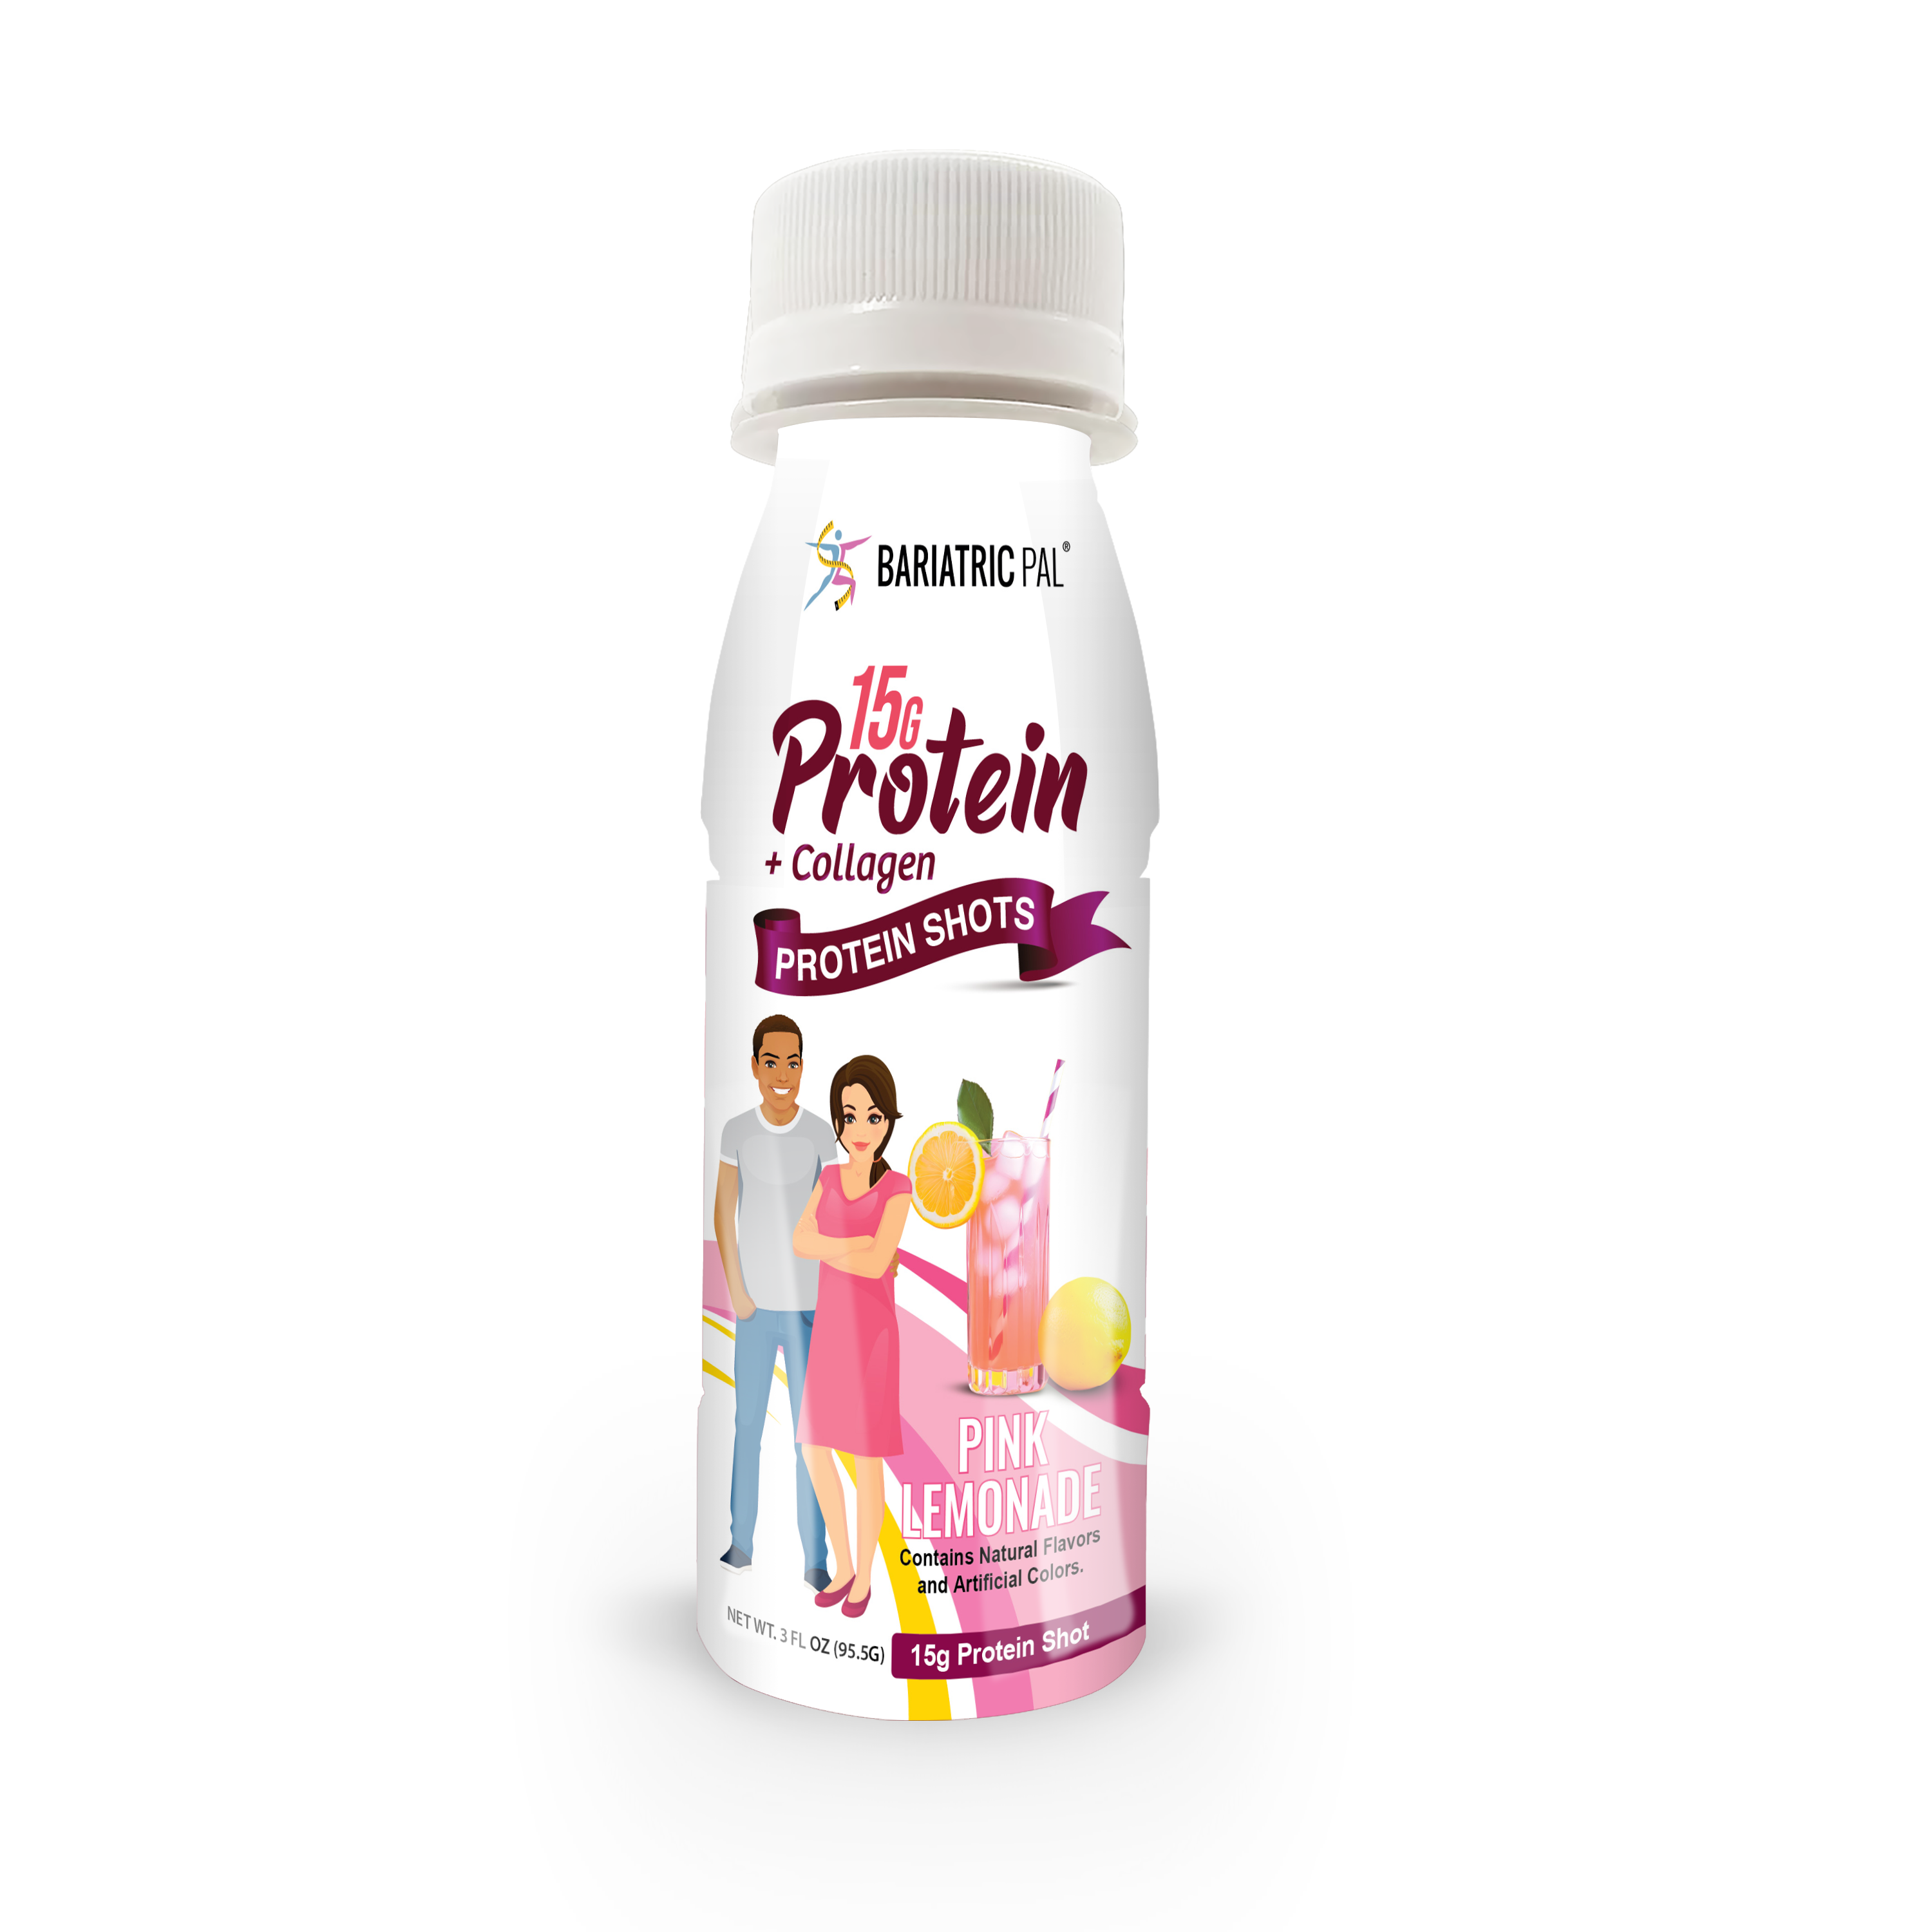 BariatricPal 15g Whey & Collagen Complete Protein Shots - Pink Lemonade